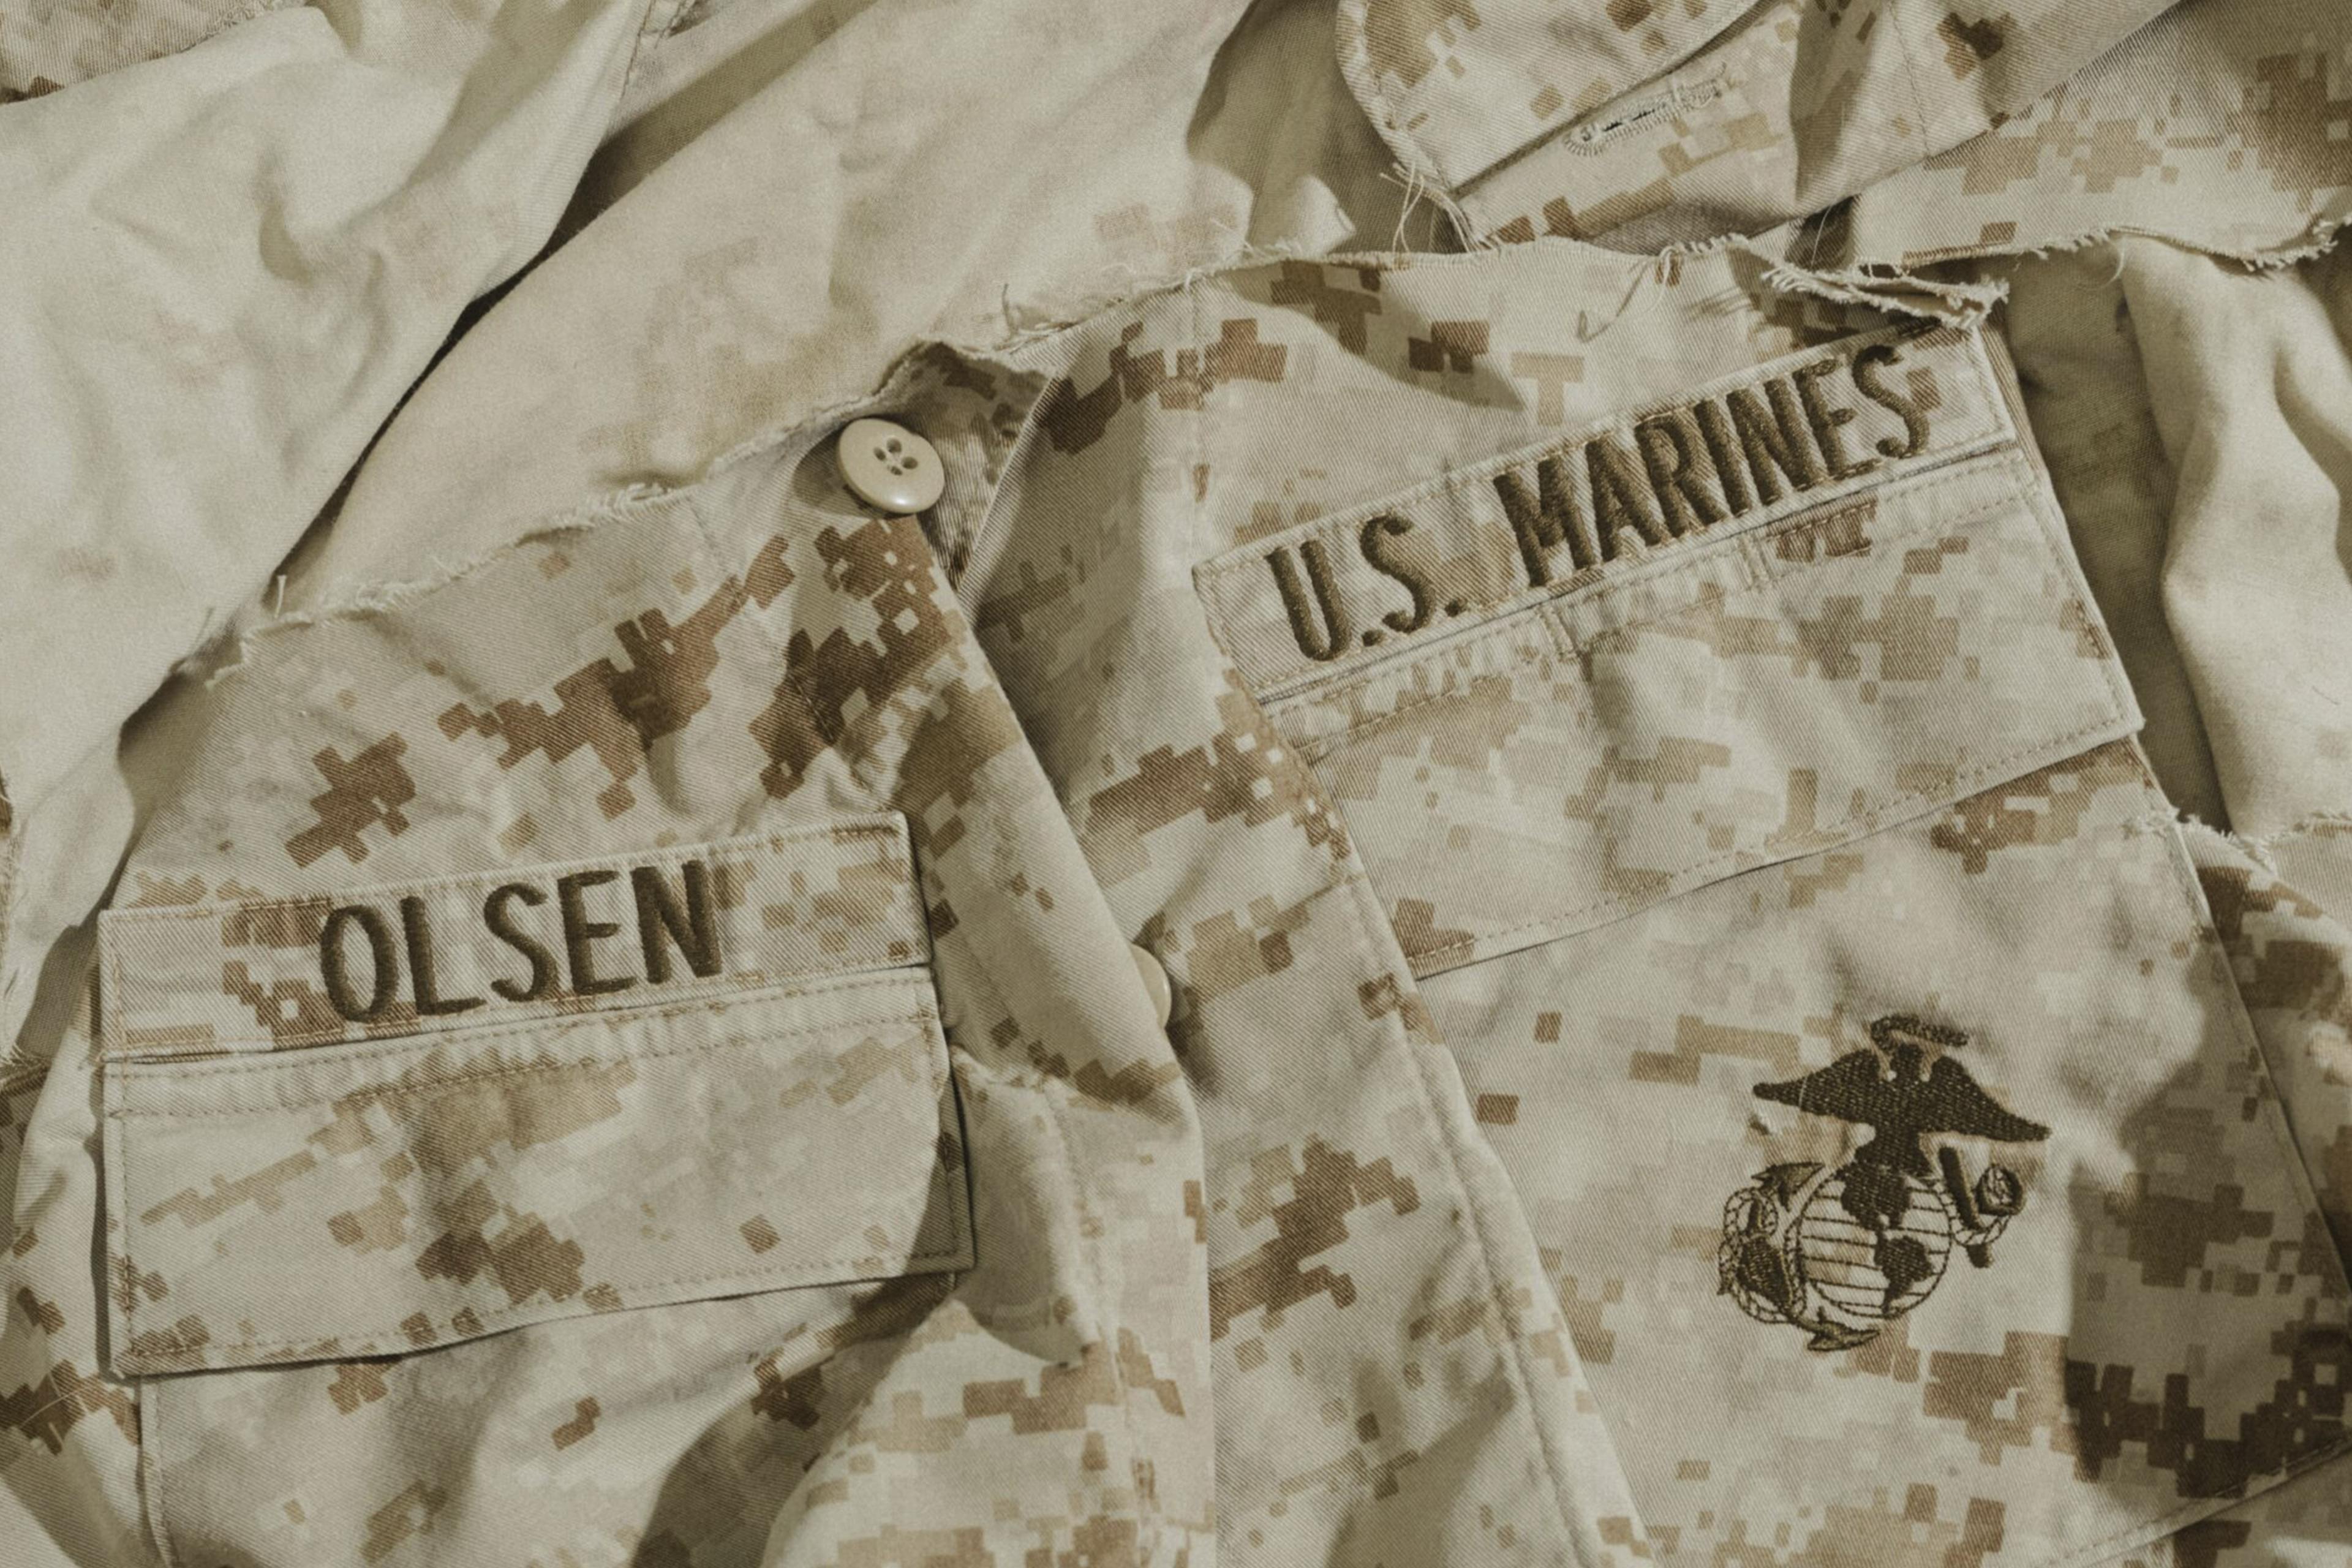 Background image showing a closeup of Scott Olsen's US Marines shirt.